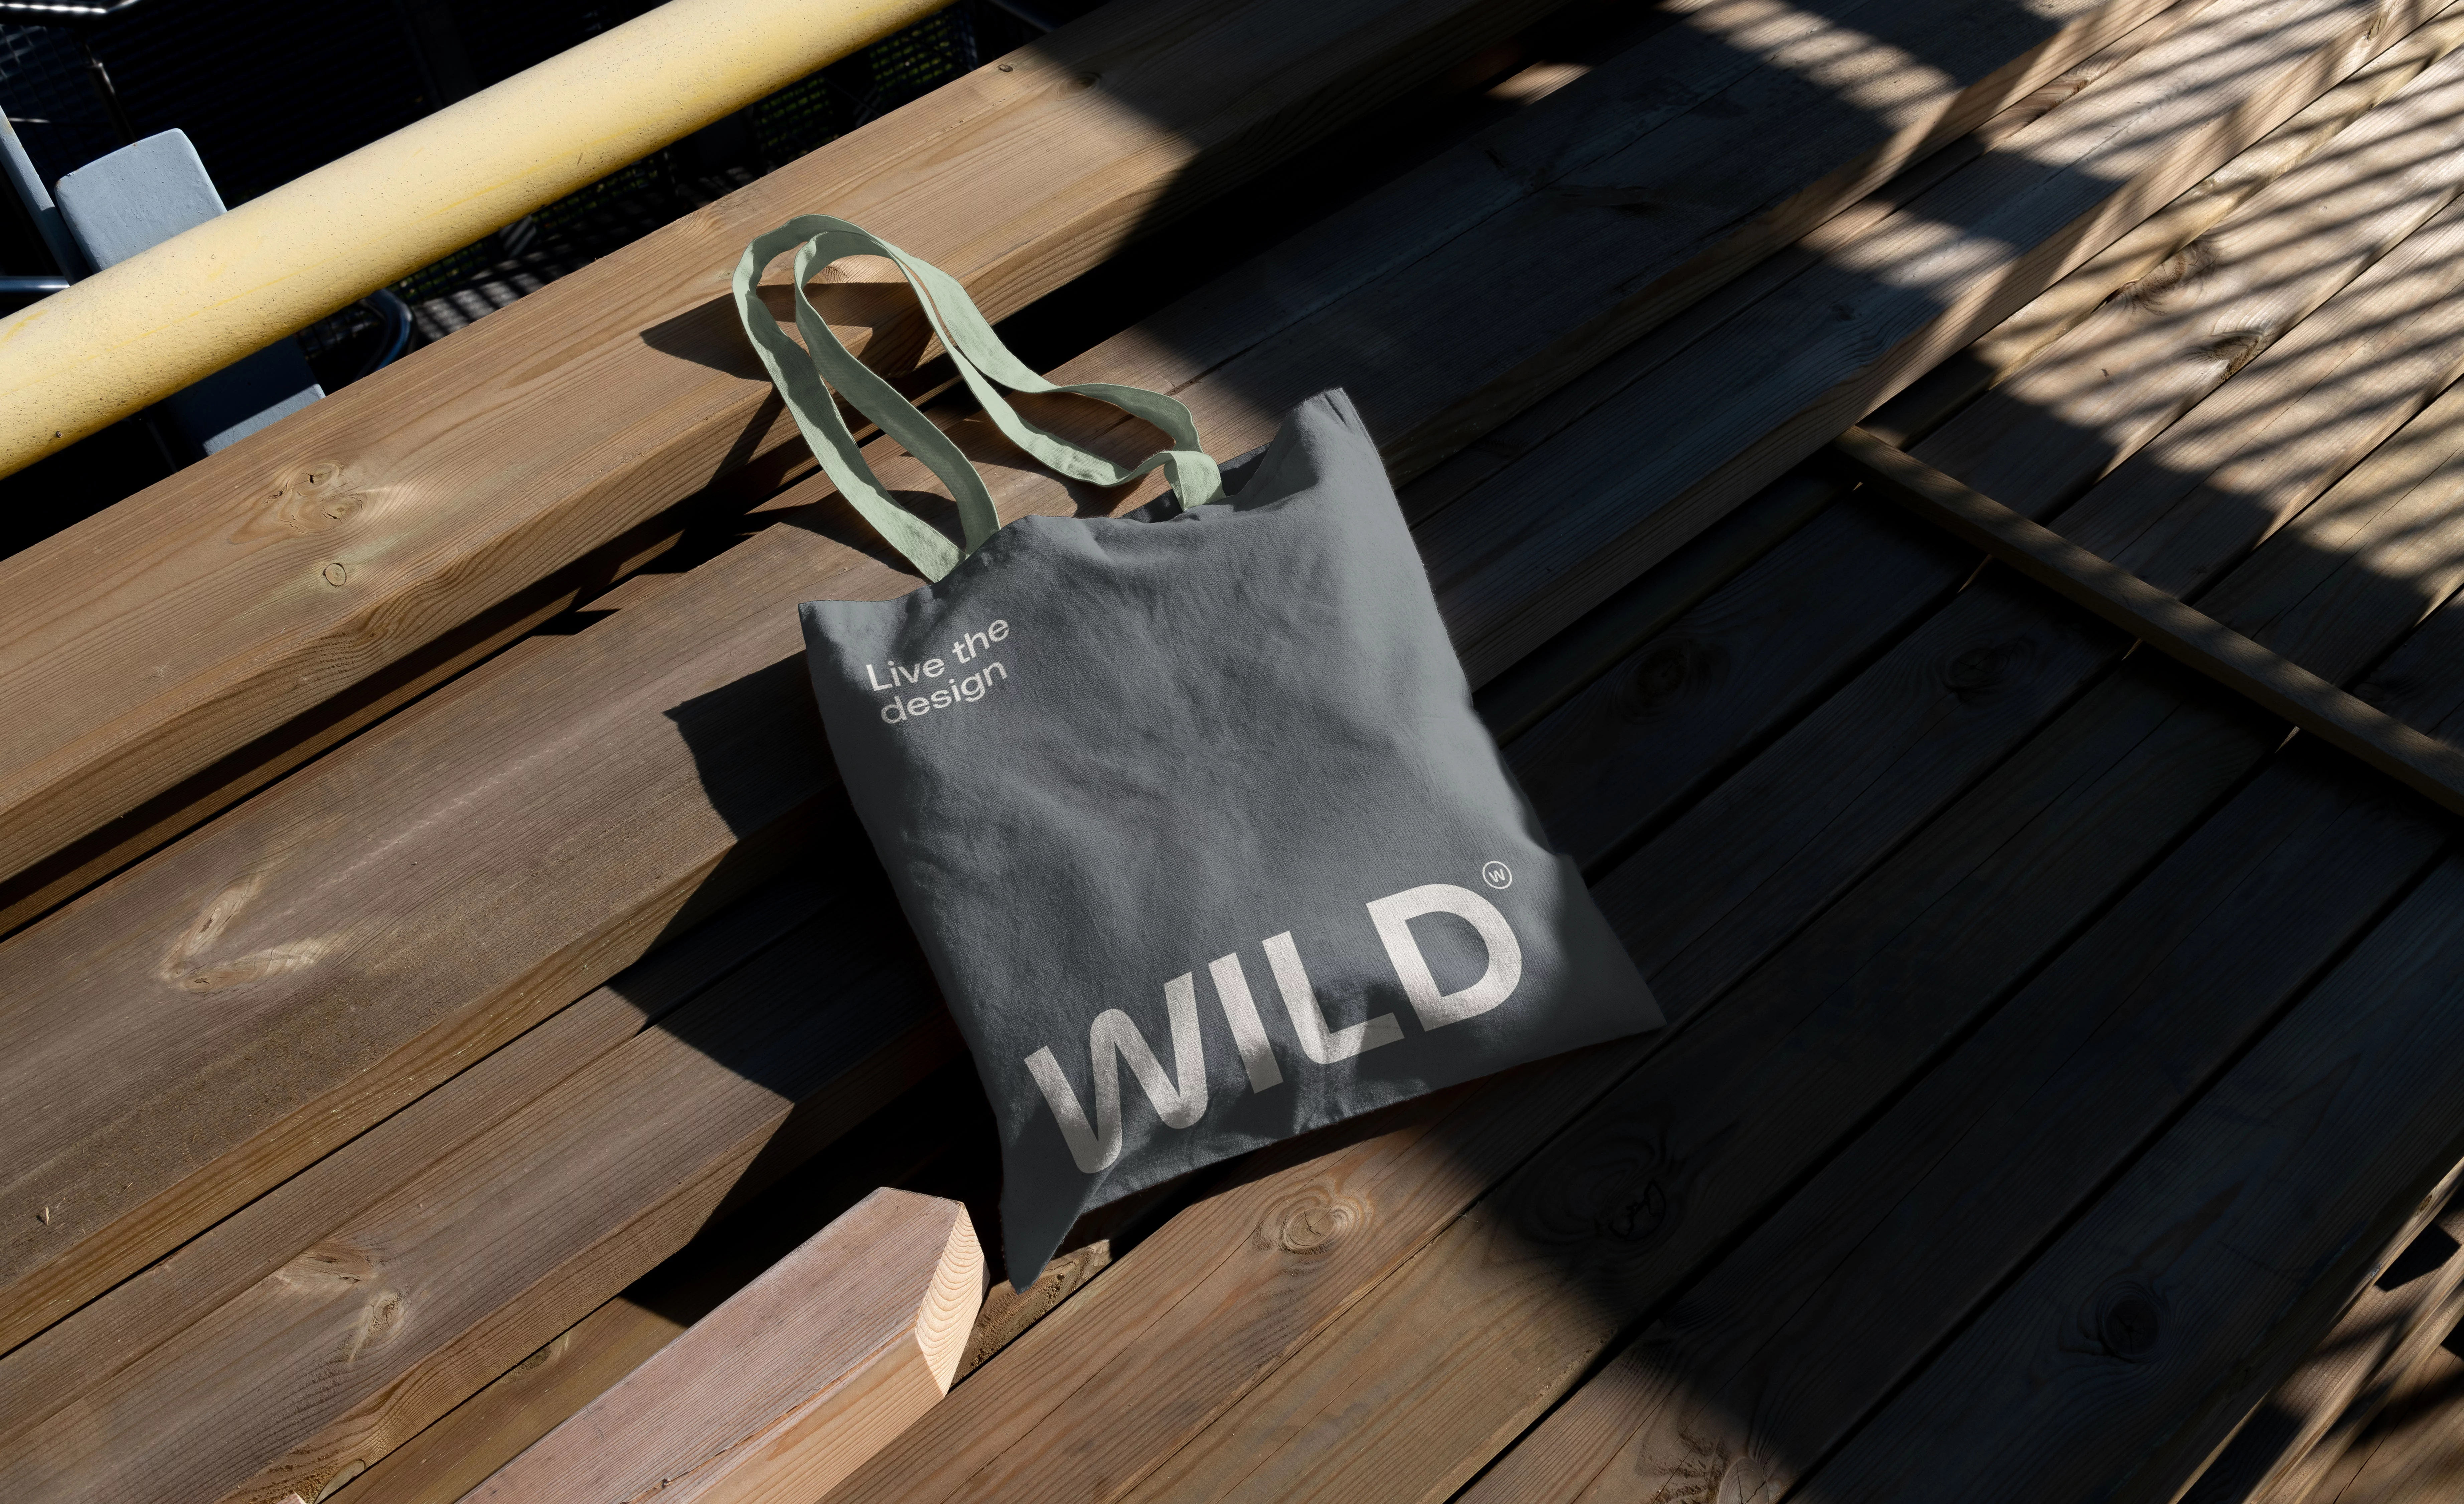 Wild - branding by MOQO - totebag